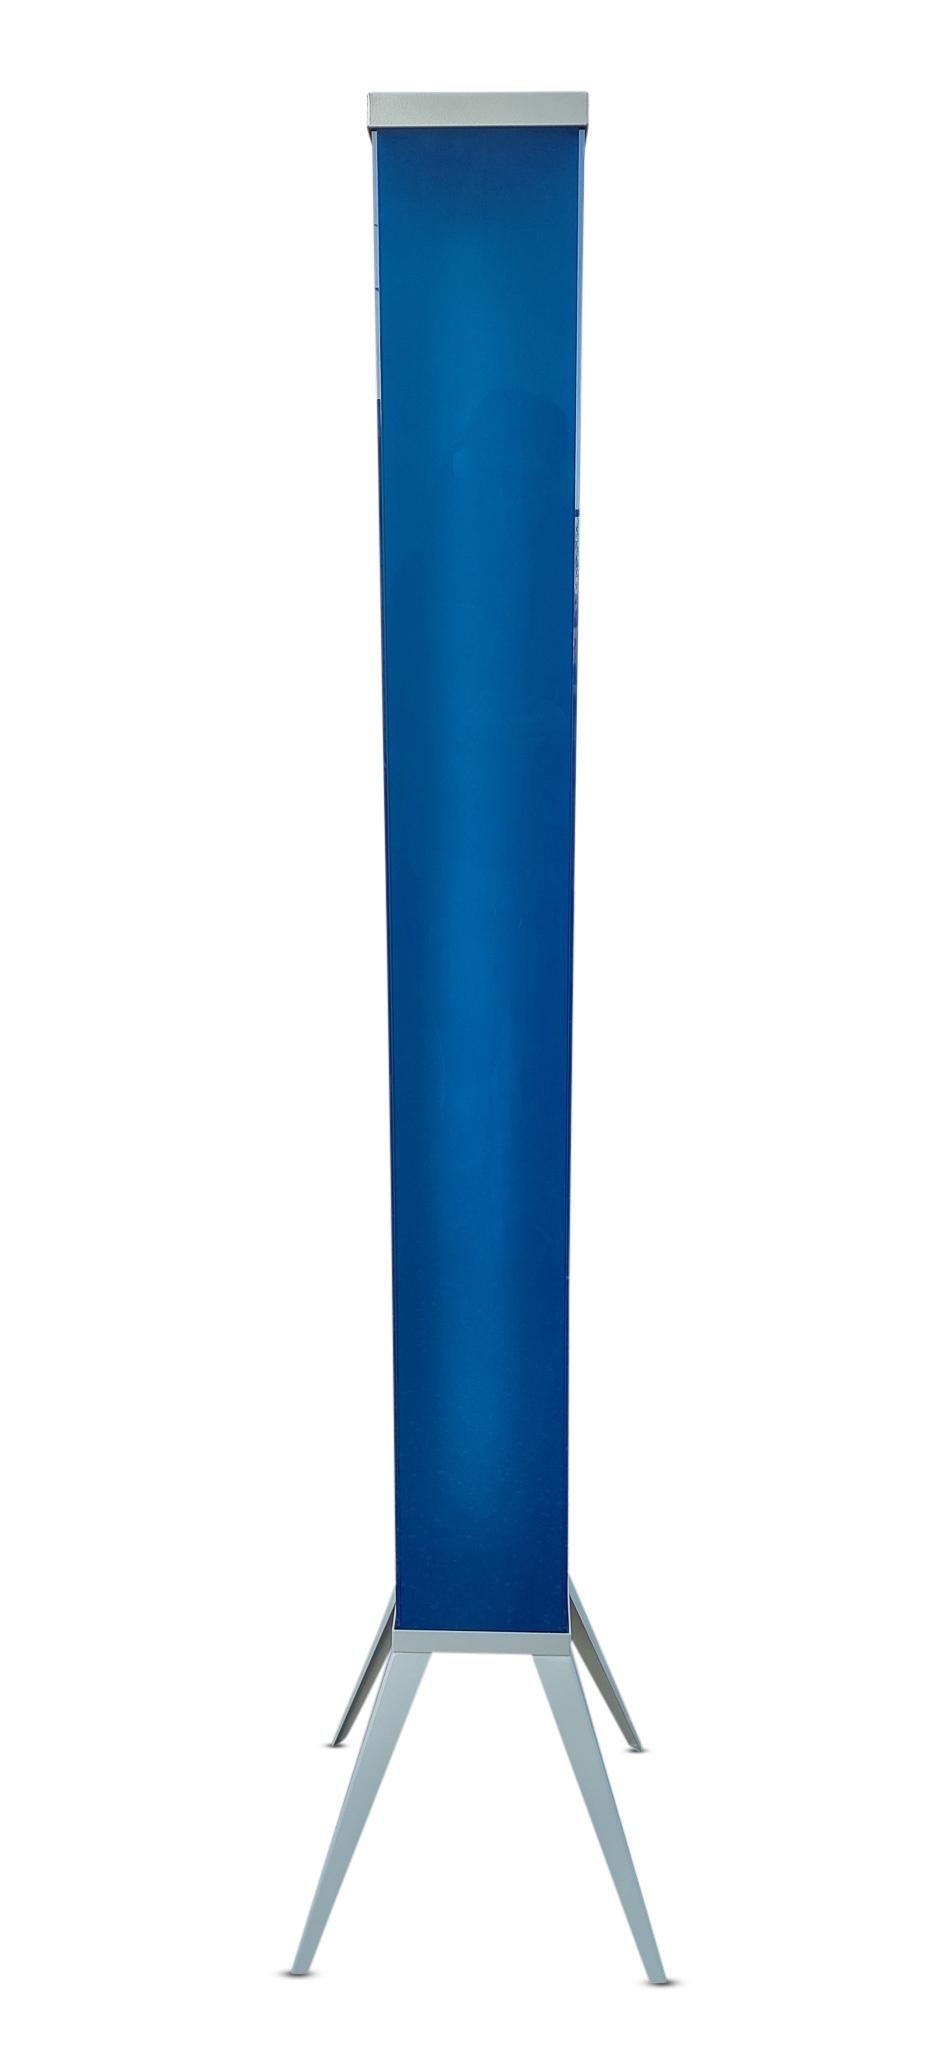 Enameled Post-Modern Sculptural Mood Lighting Tower Blue Glass Floor Lamp by Curvet USA For Sale